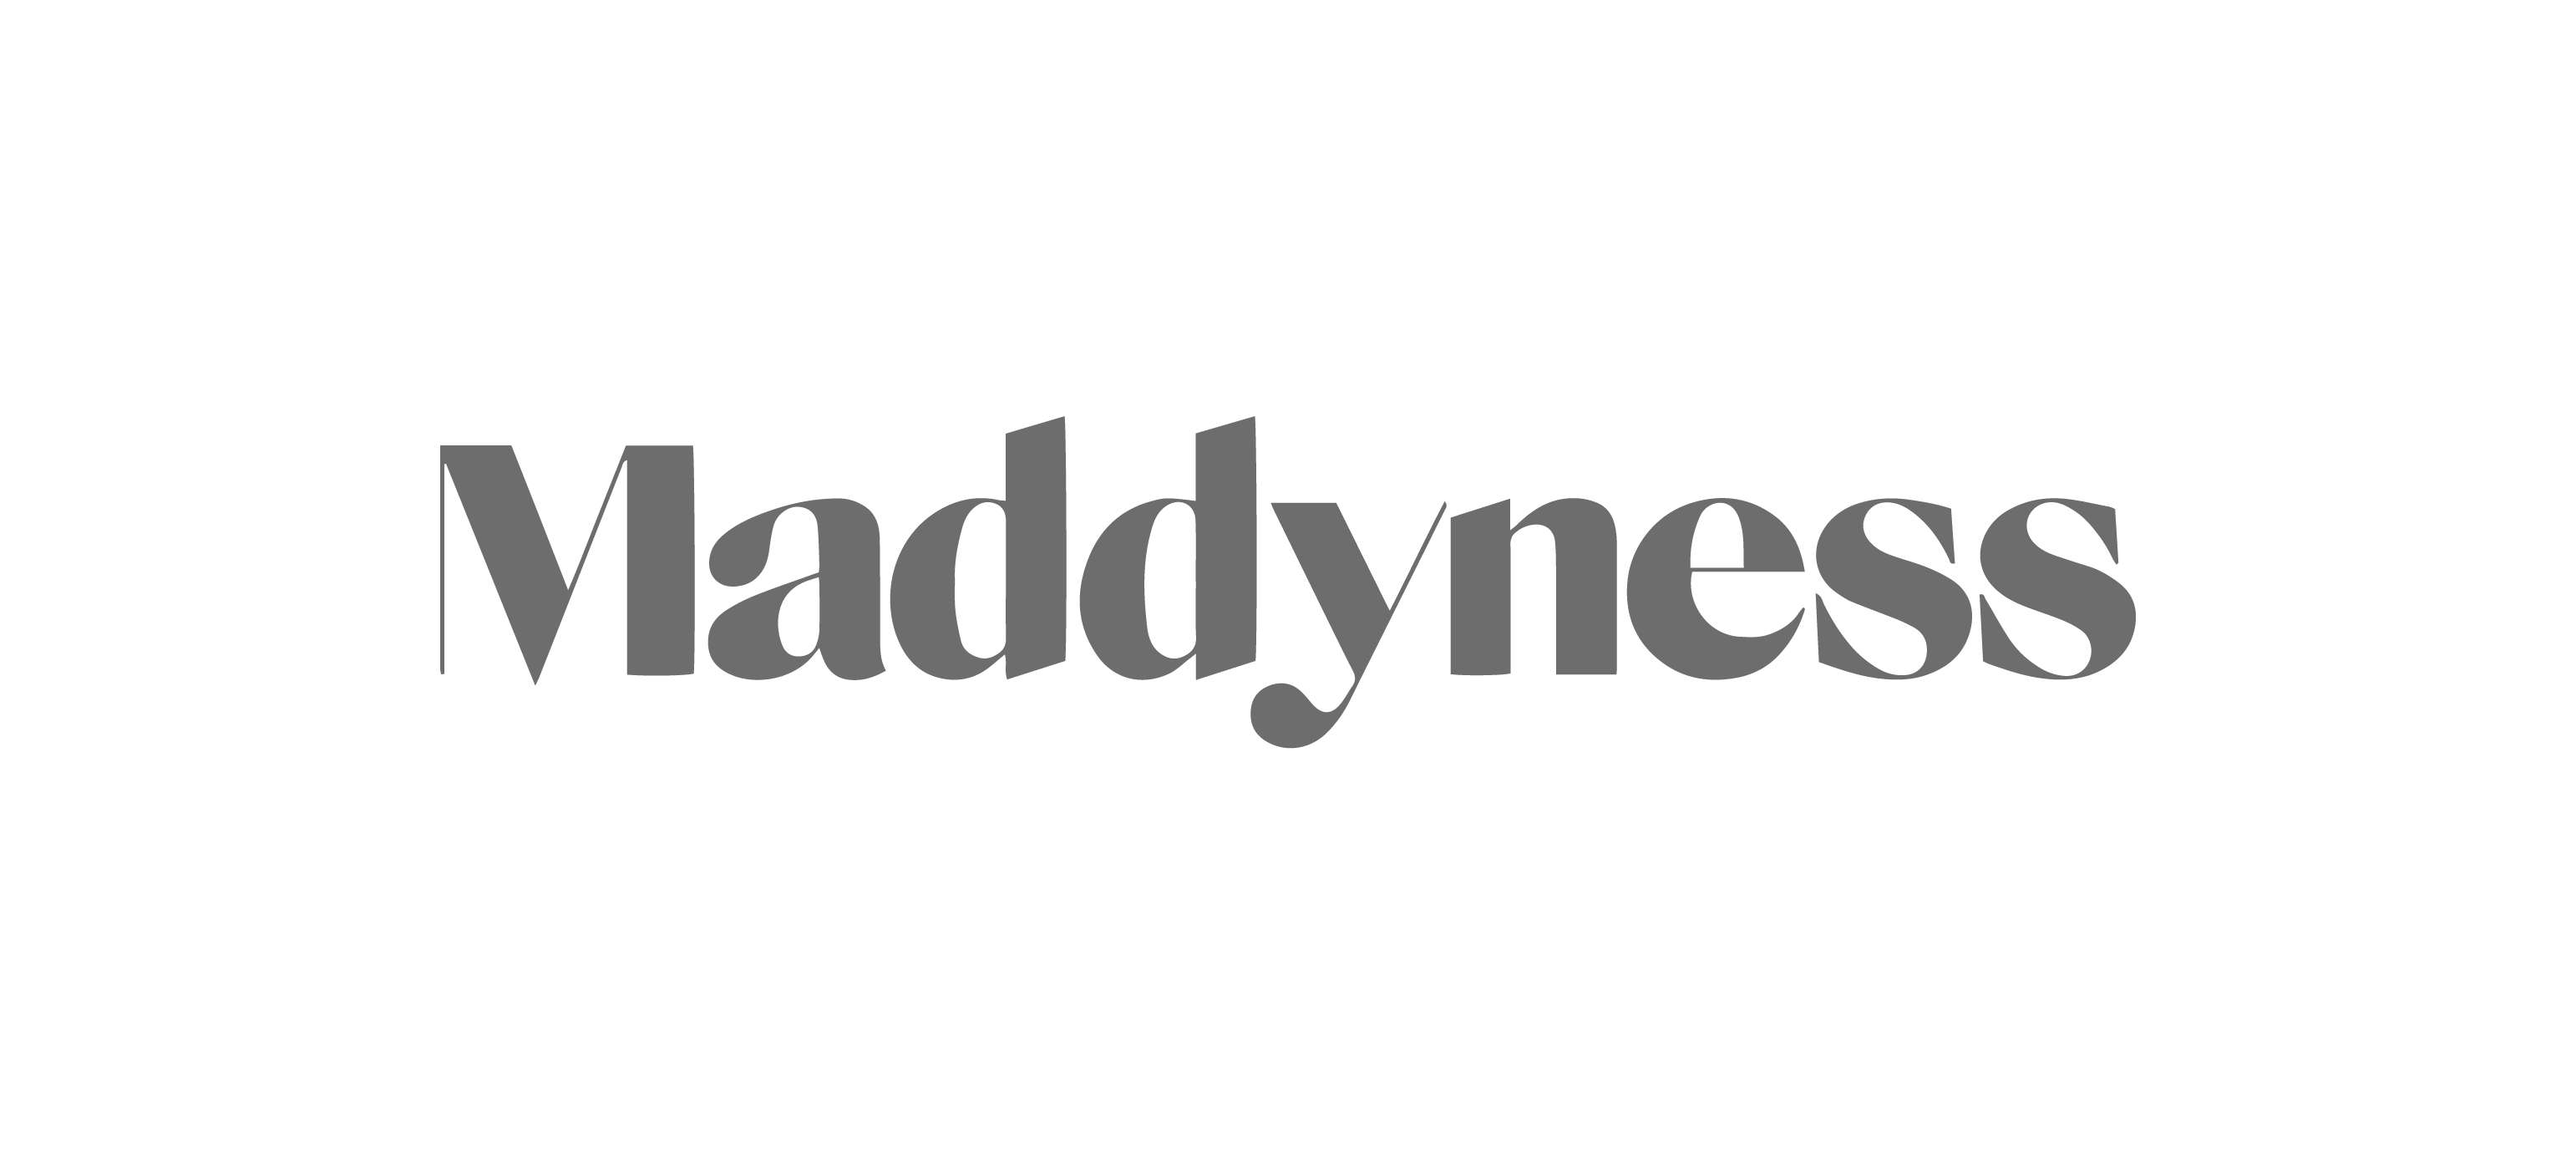 Deazy Client Logos_Maddyness - Dark